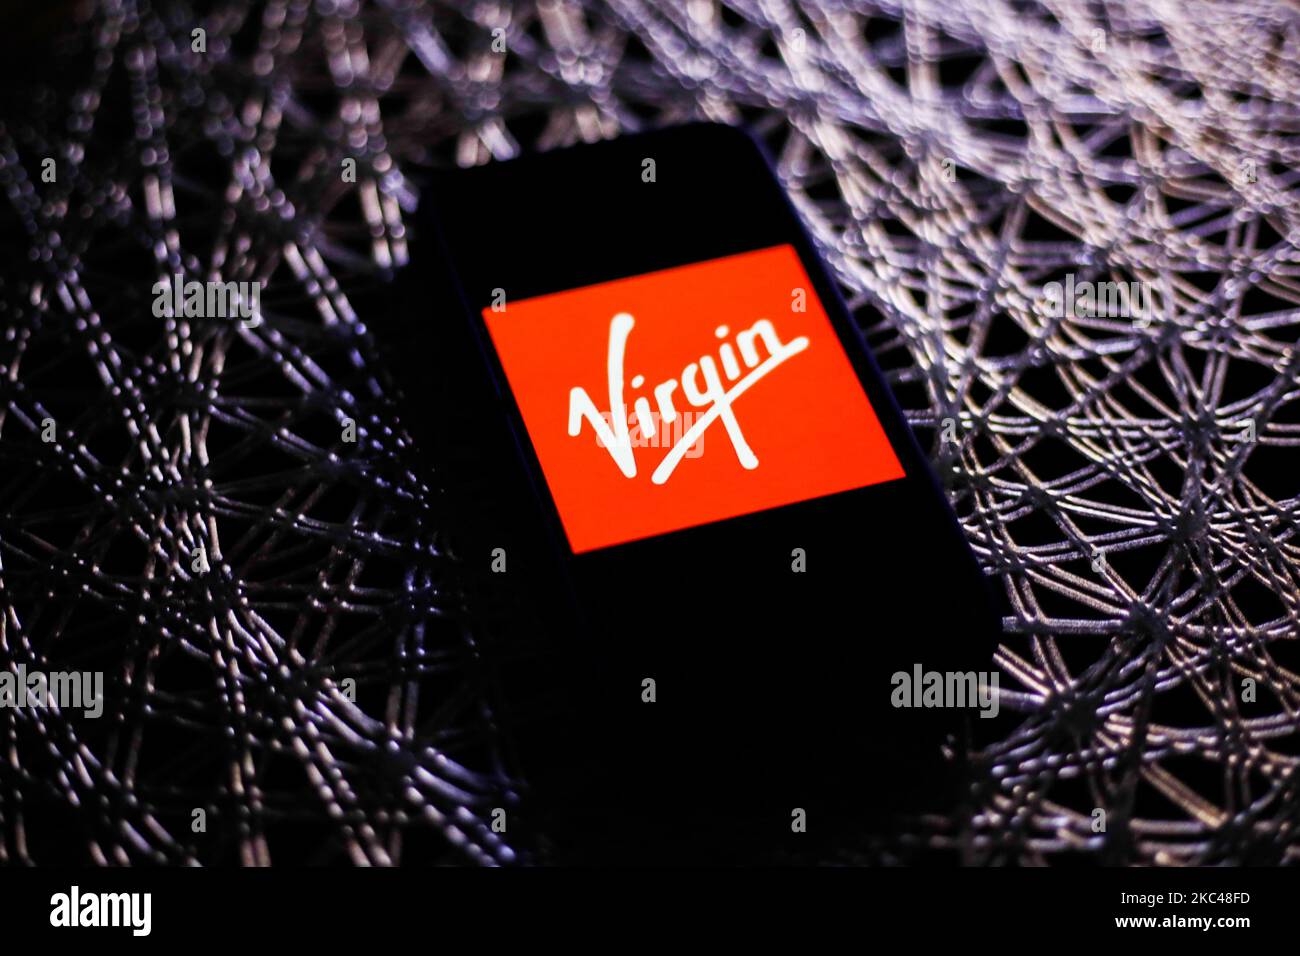 Virgin logo is seen displayed on a phone screen in this illustration photo taken in Poland on November 19, 2020. (Photo by Jakub Porzycki/NurPhoto) Stock Photo